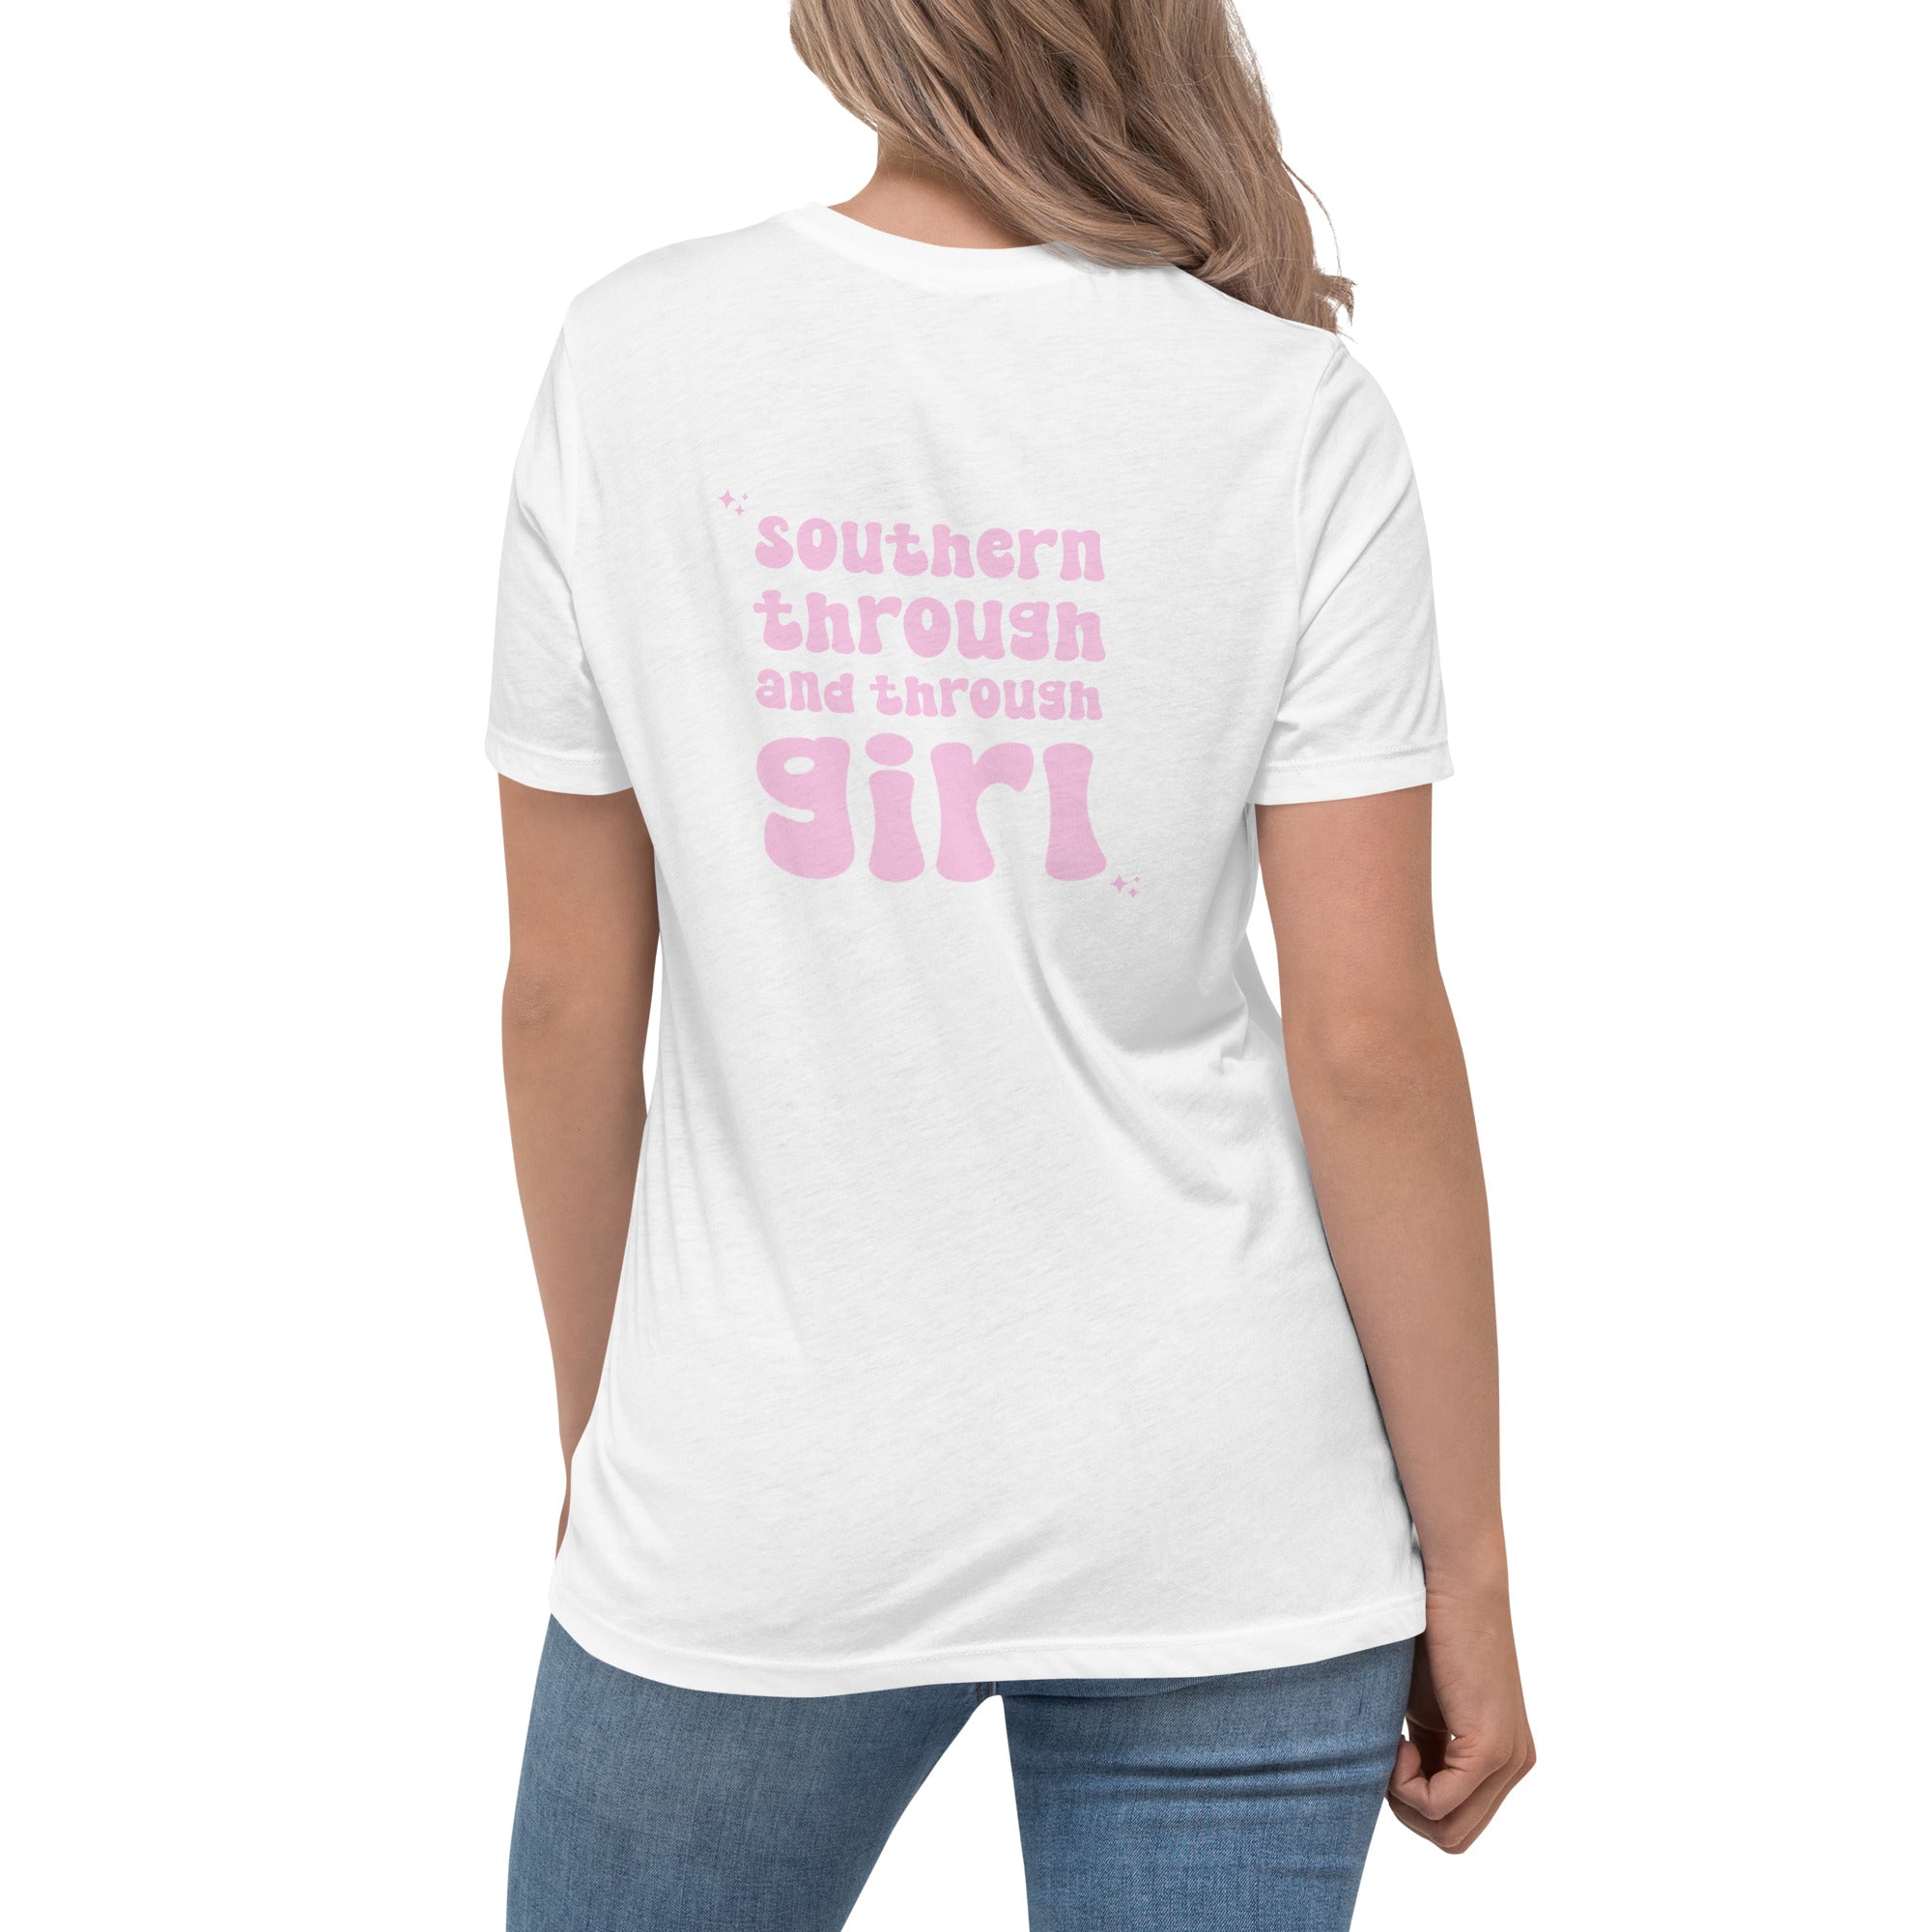 Southern Girl Women's Relaxed T-Shirt